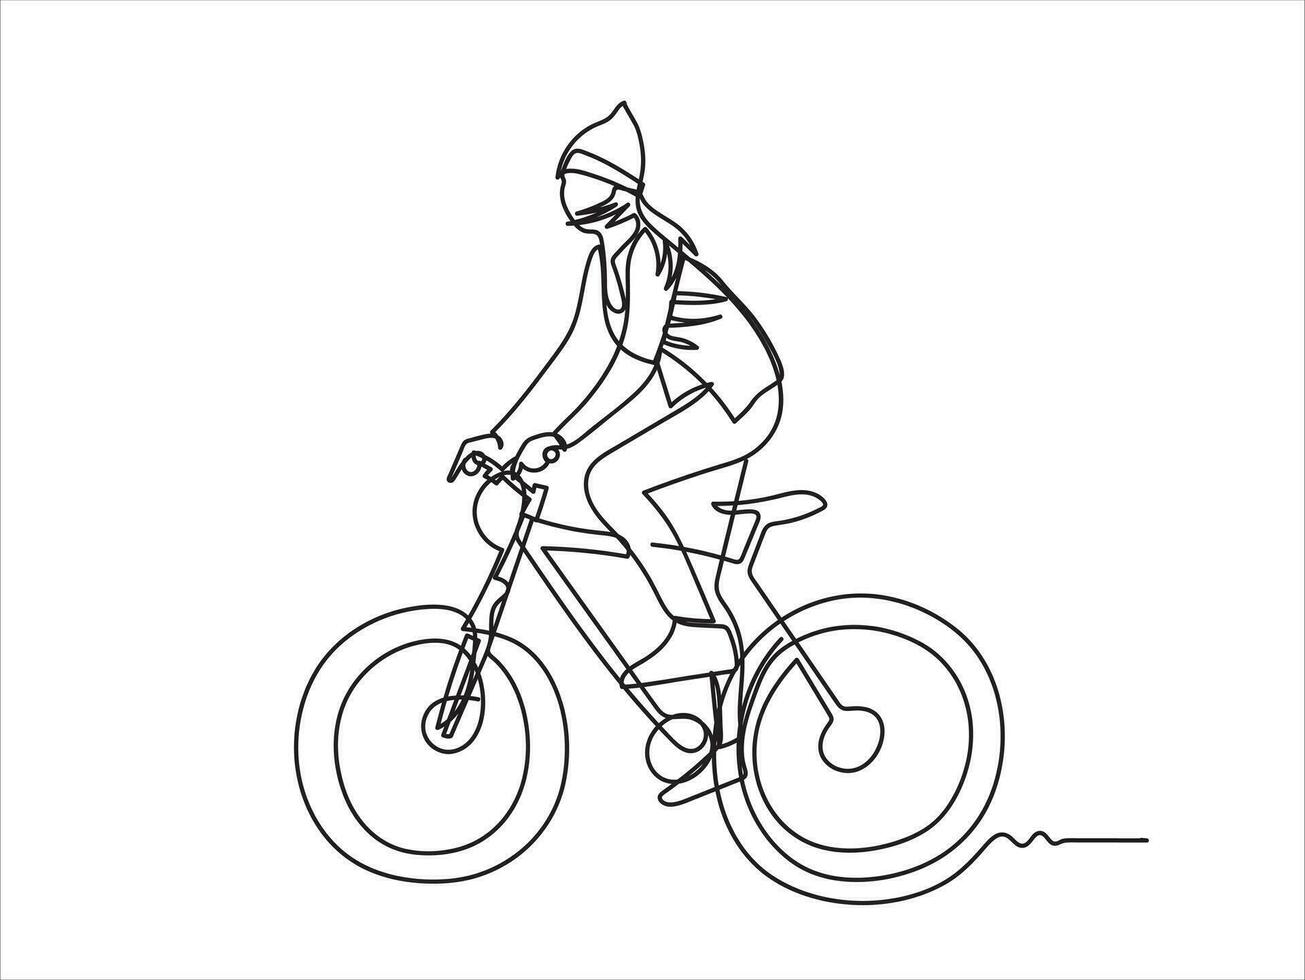 dibujo contento personas montando bicicleta mundo bicicleta día concepto continuo línea dibujo vector ilustración